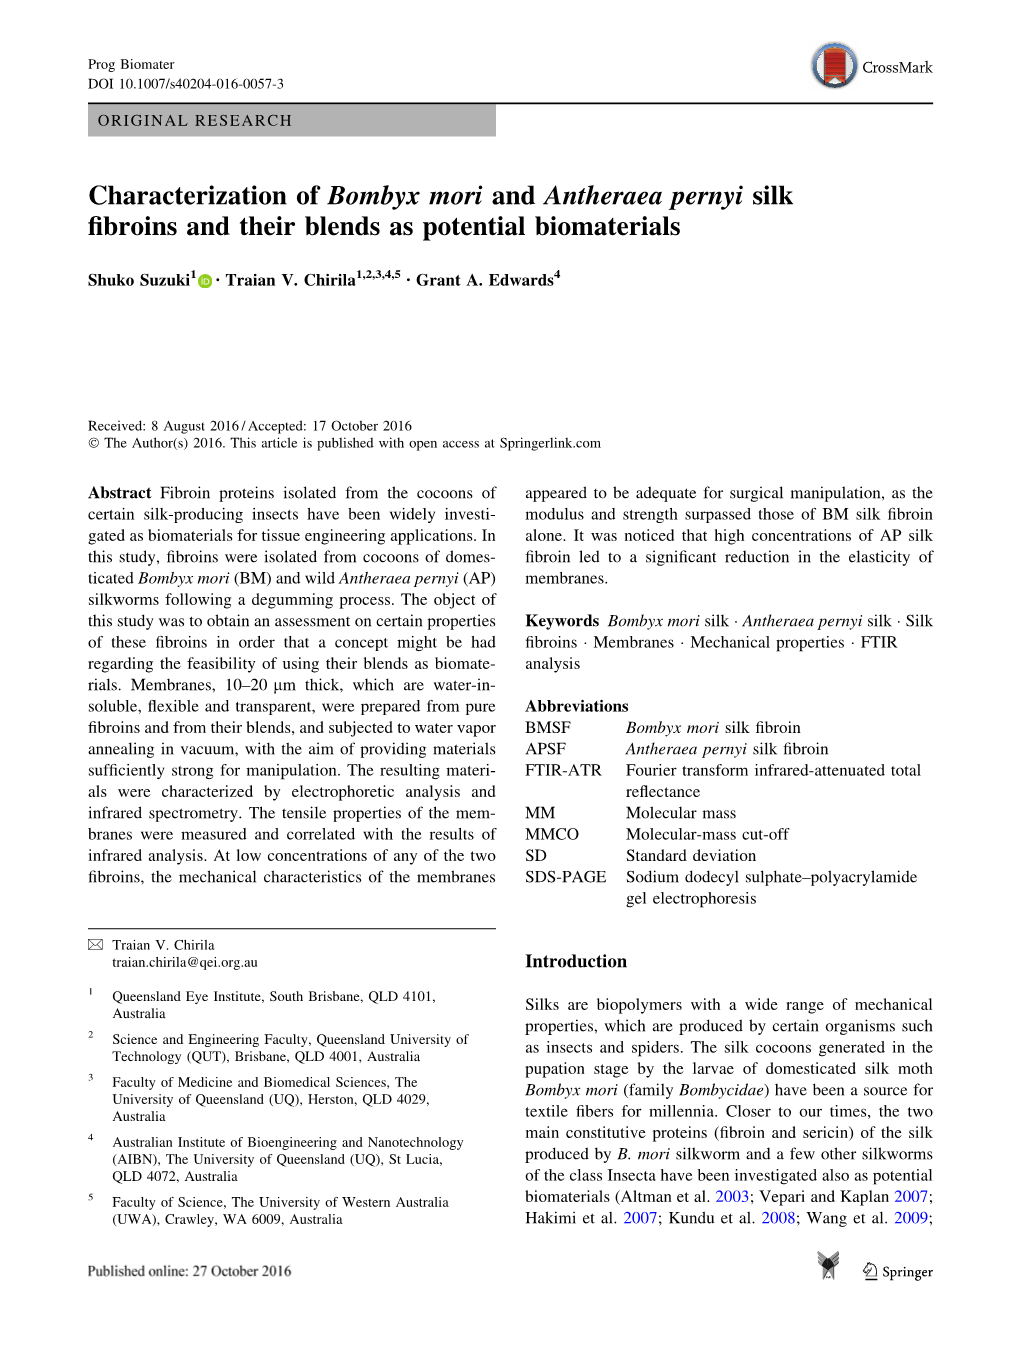 Characterization of Bombyx Mori and Antheraea Pernyi Silk Fibroins And